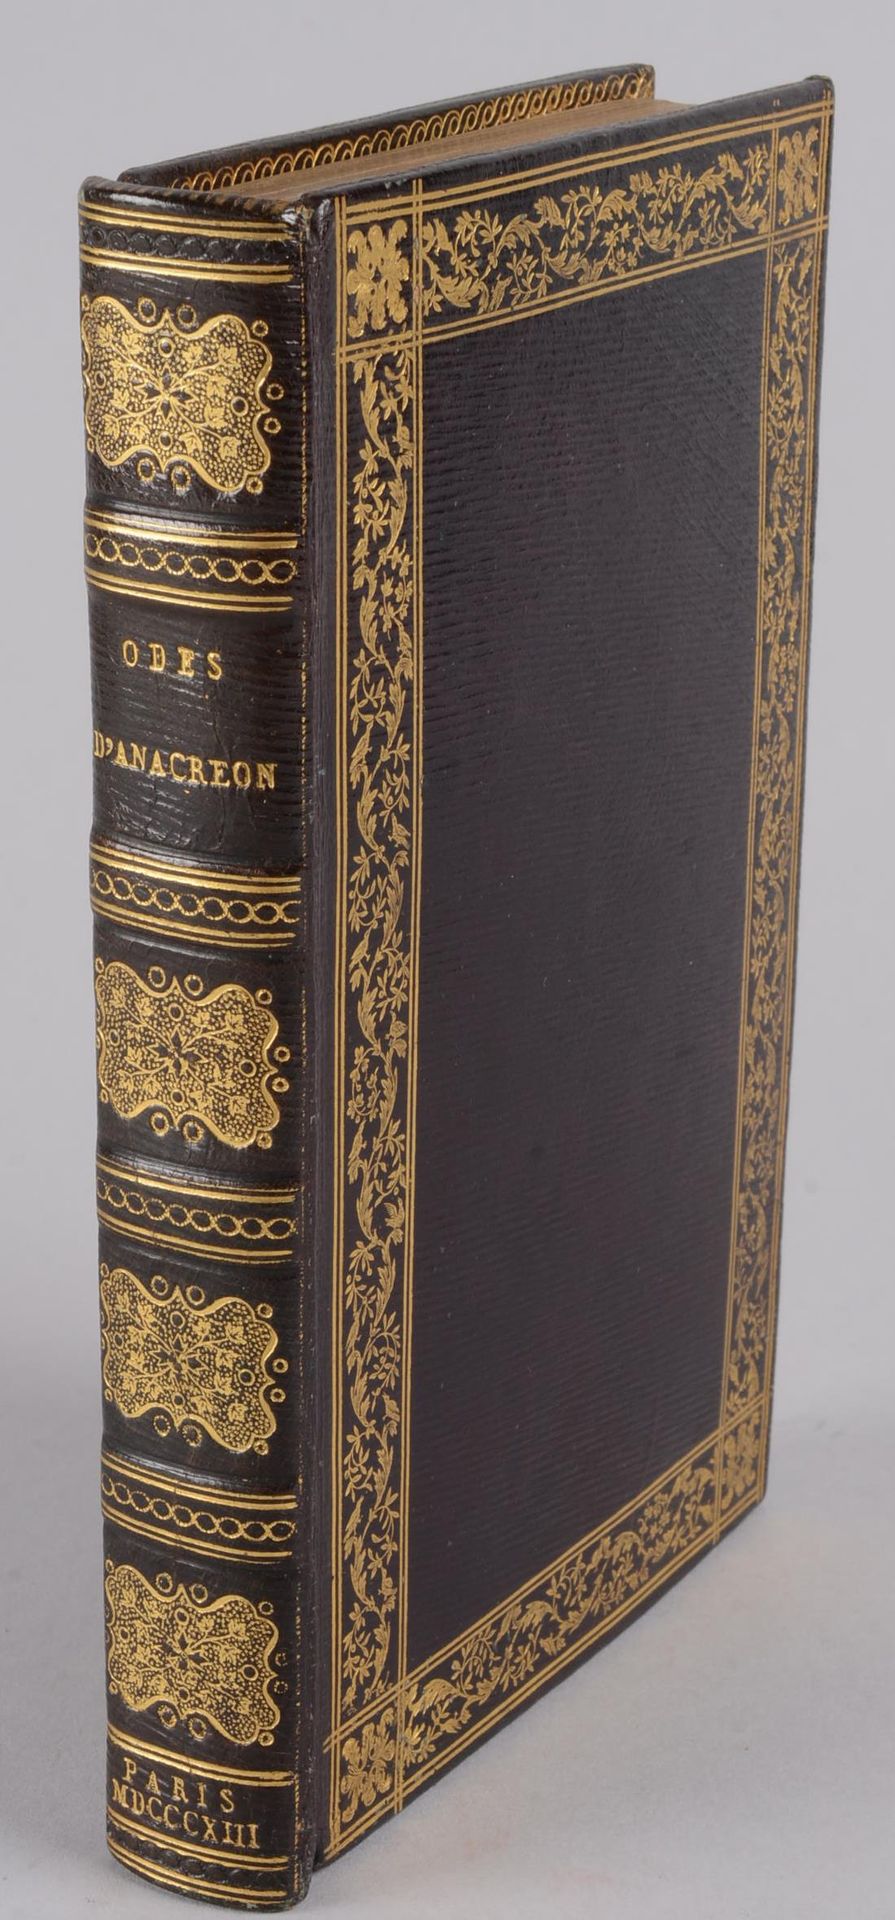 ANACREON ANACREON



 Odas de Anacreonte



 París, por H. Nicolle, 1813



 Peq&hellip;